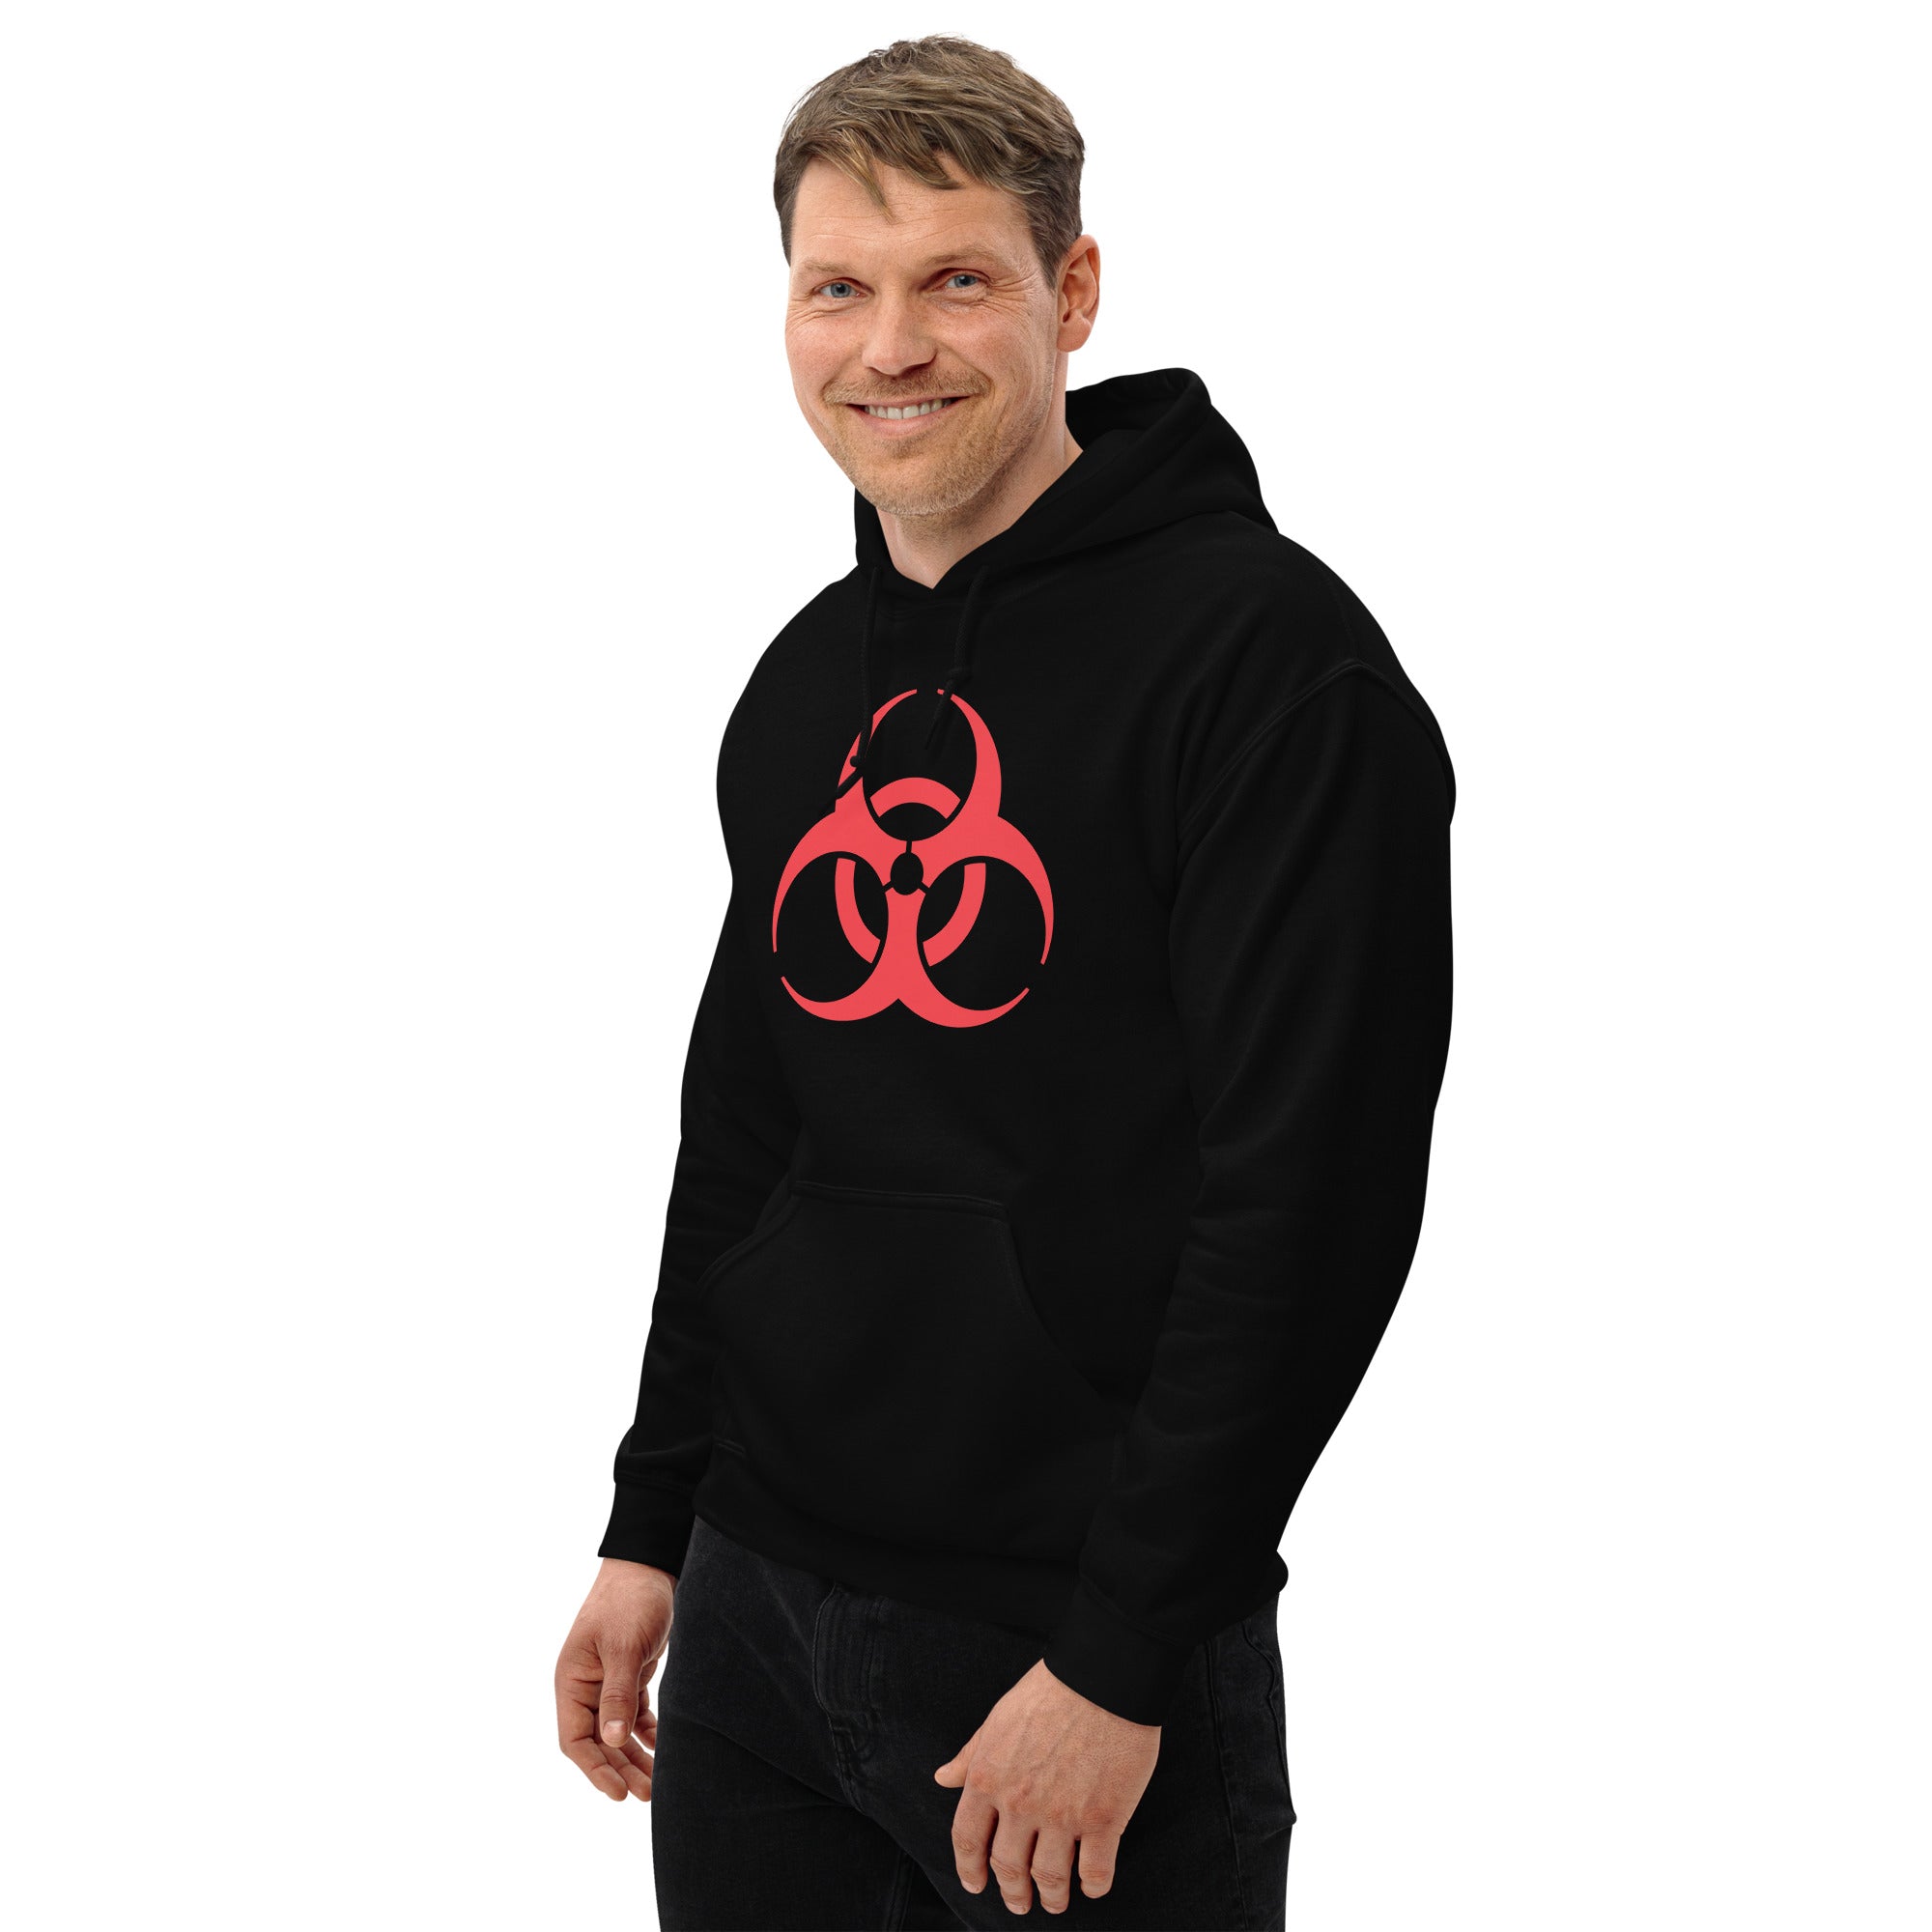 Red Biohazard Sign Toxic Chemical Symbol Unisex Hoodie Sweatshirt - Edge of Life Designs